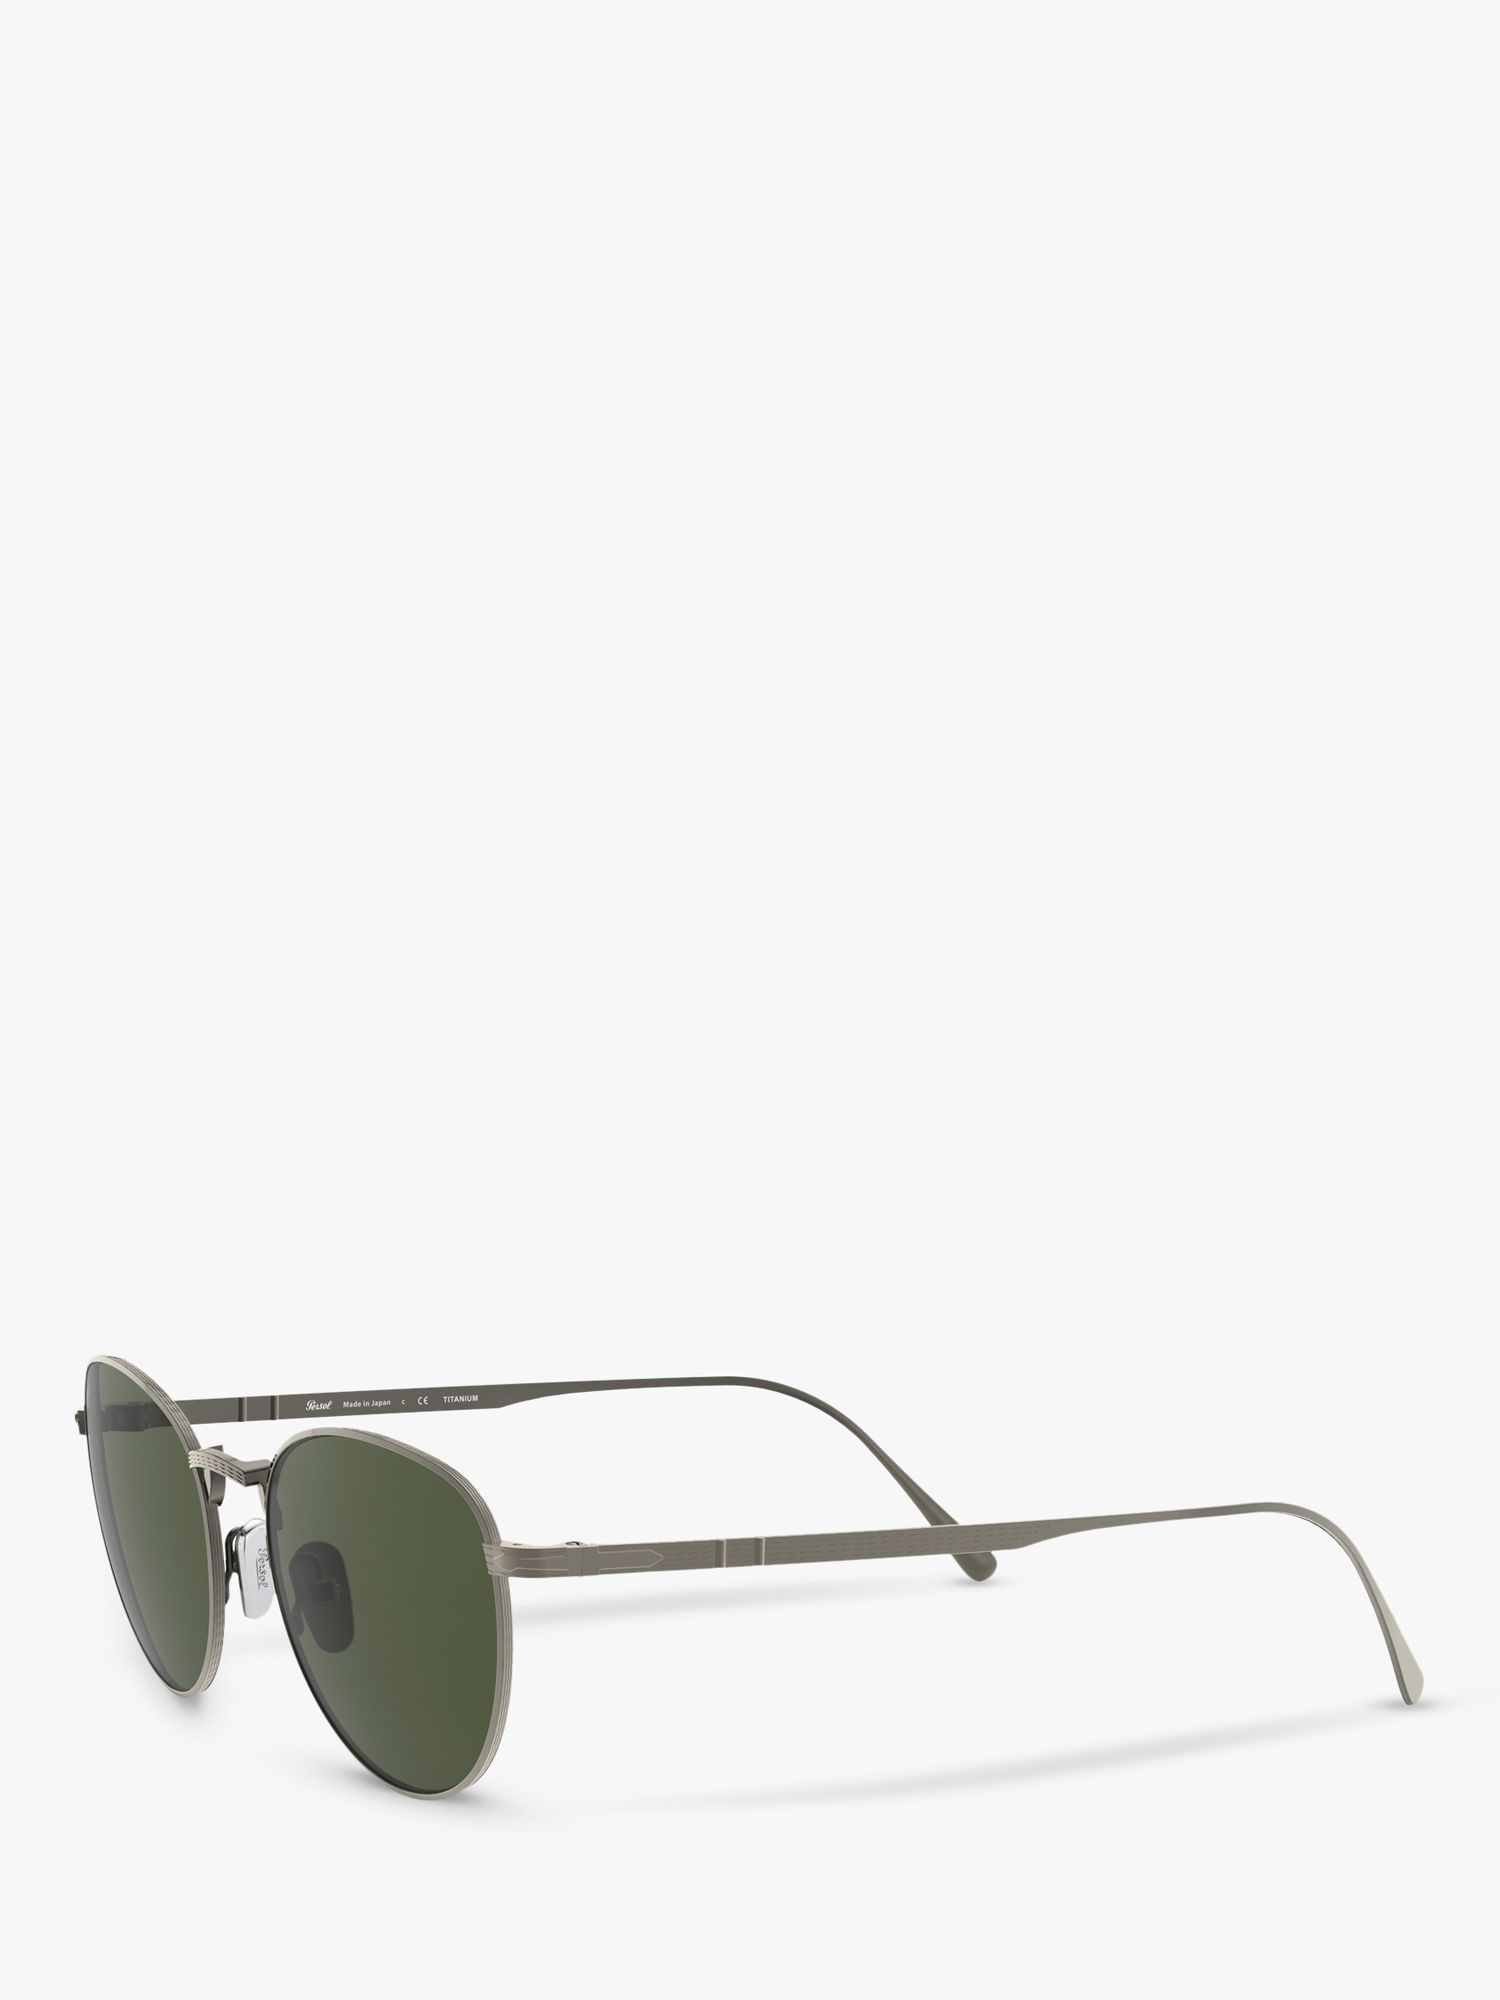 Buy Persol PO5002ST Men's Oval Sunglasses Online at johnlewis.com